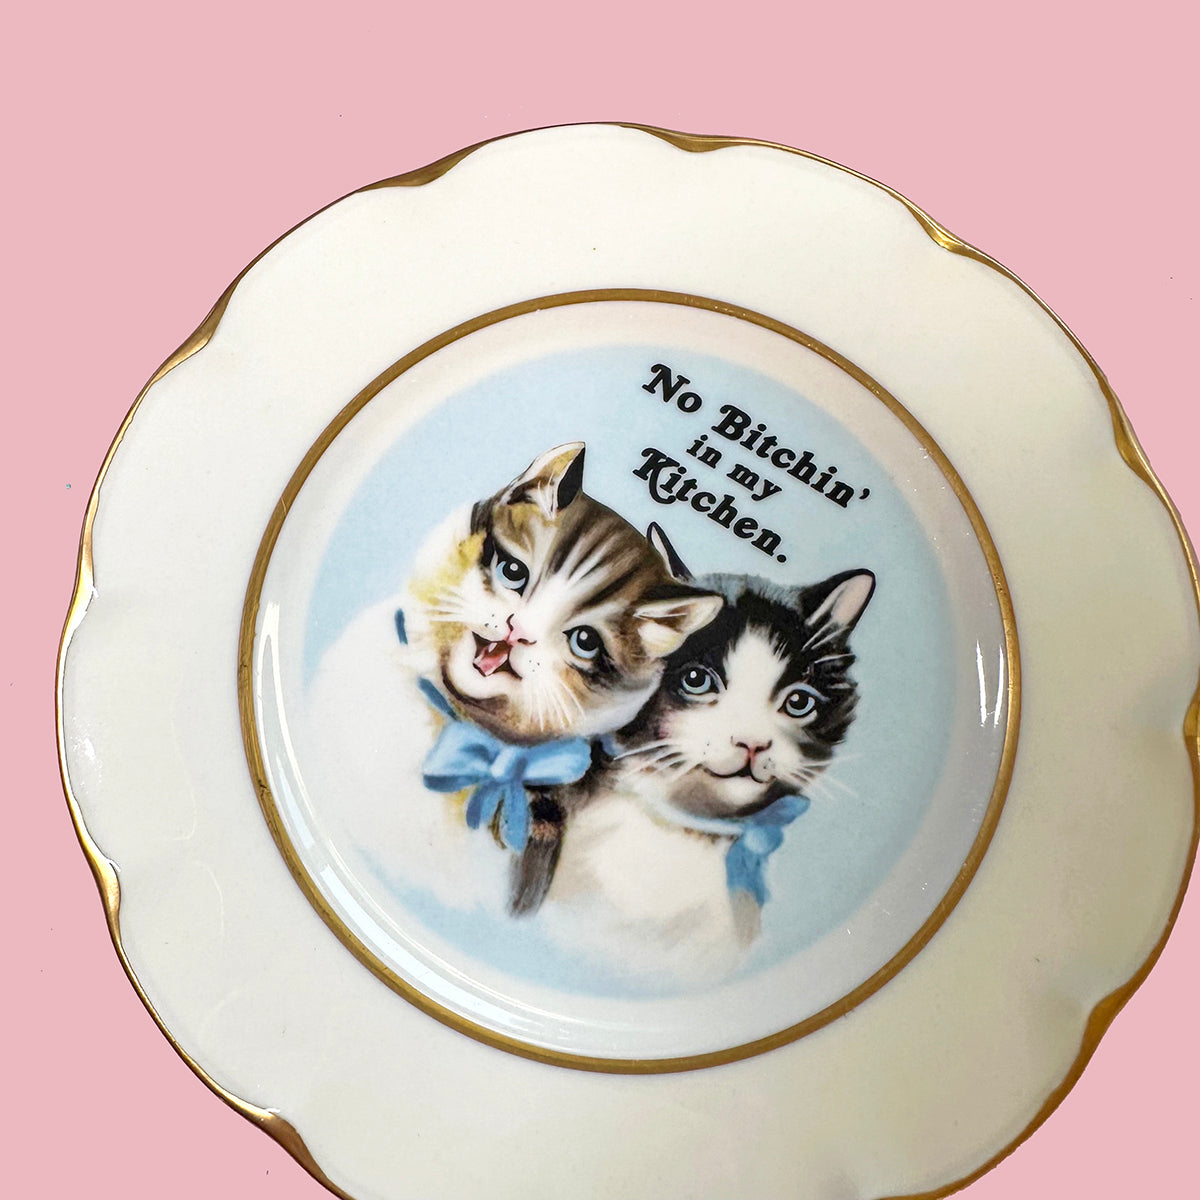 Vintage Art Plate - Cat plate - "No Bitchin' In my Kitchen"